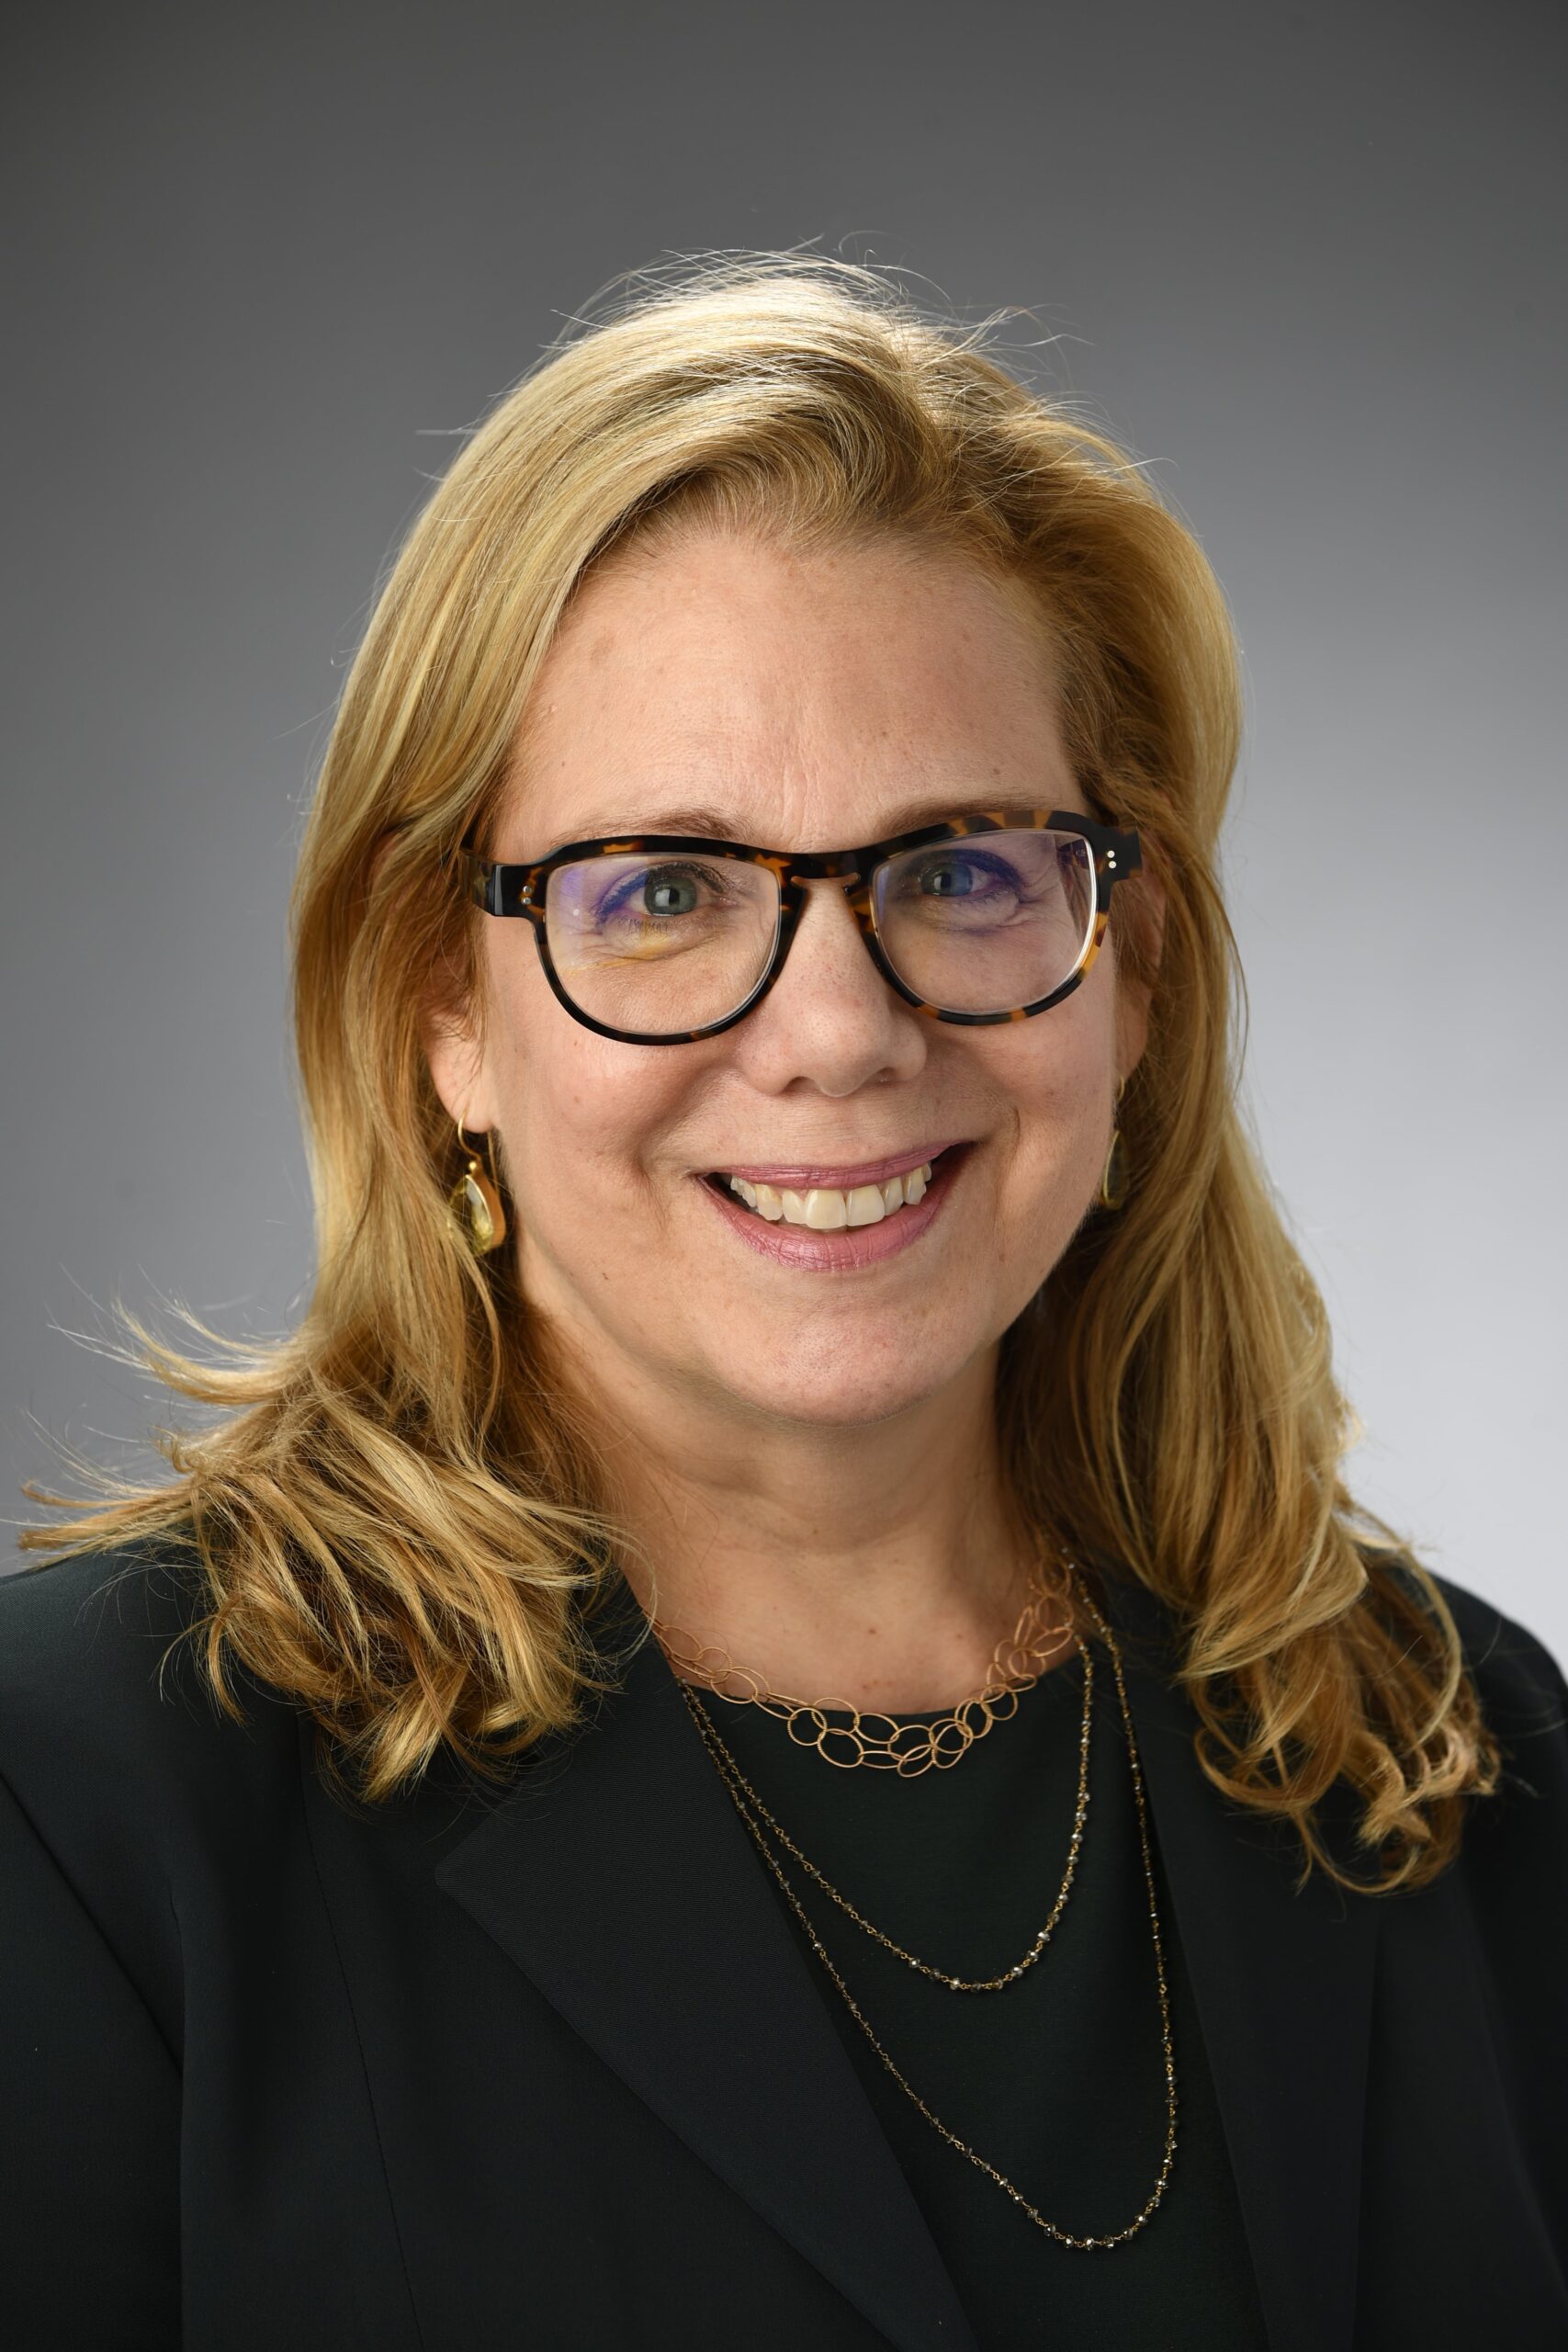 Cathy Hepworth, Head of Emerging Markets Debt di PGIM Fixed Income